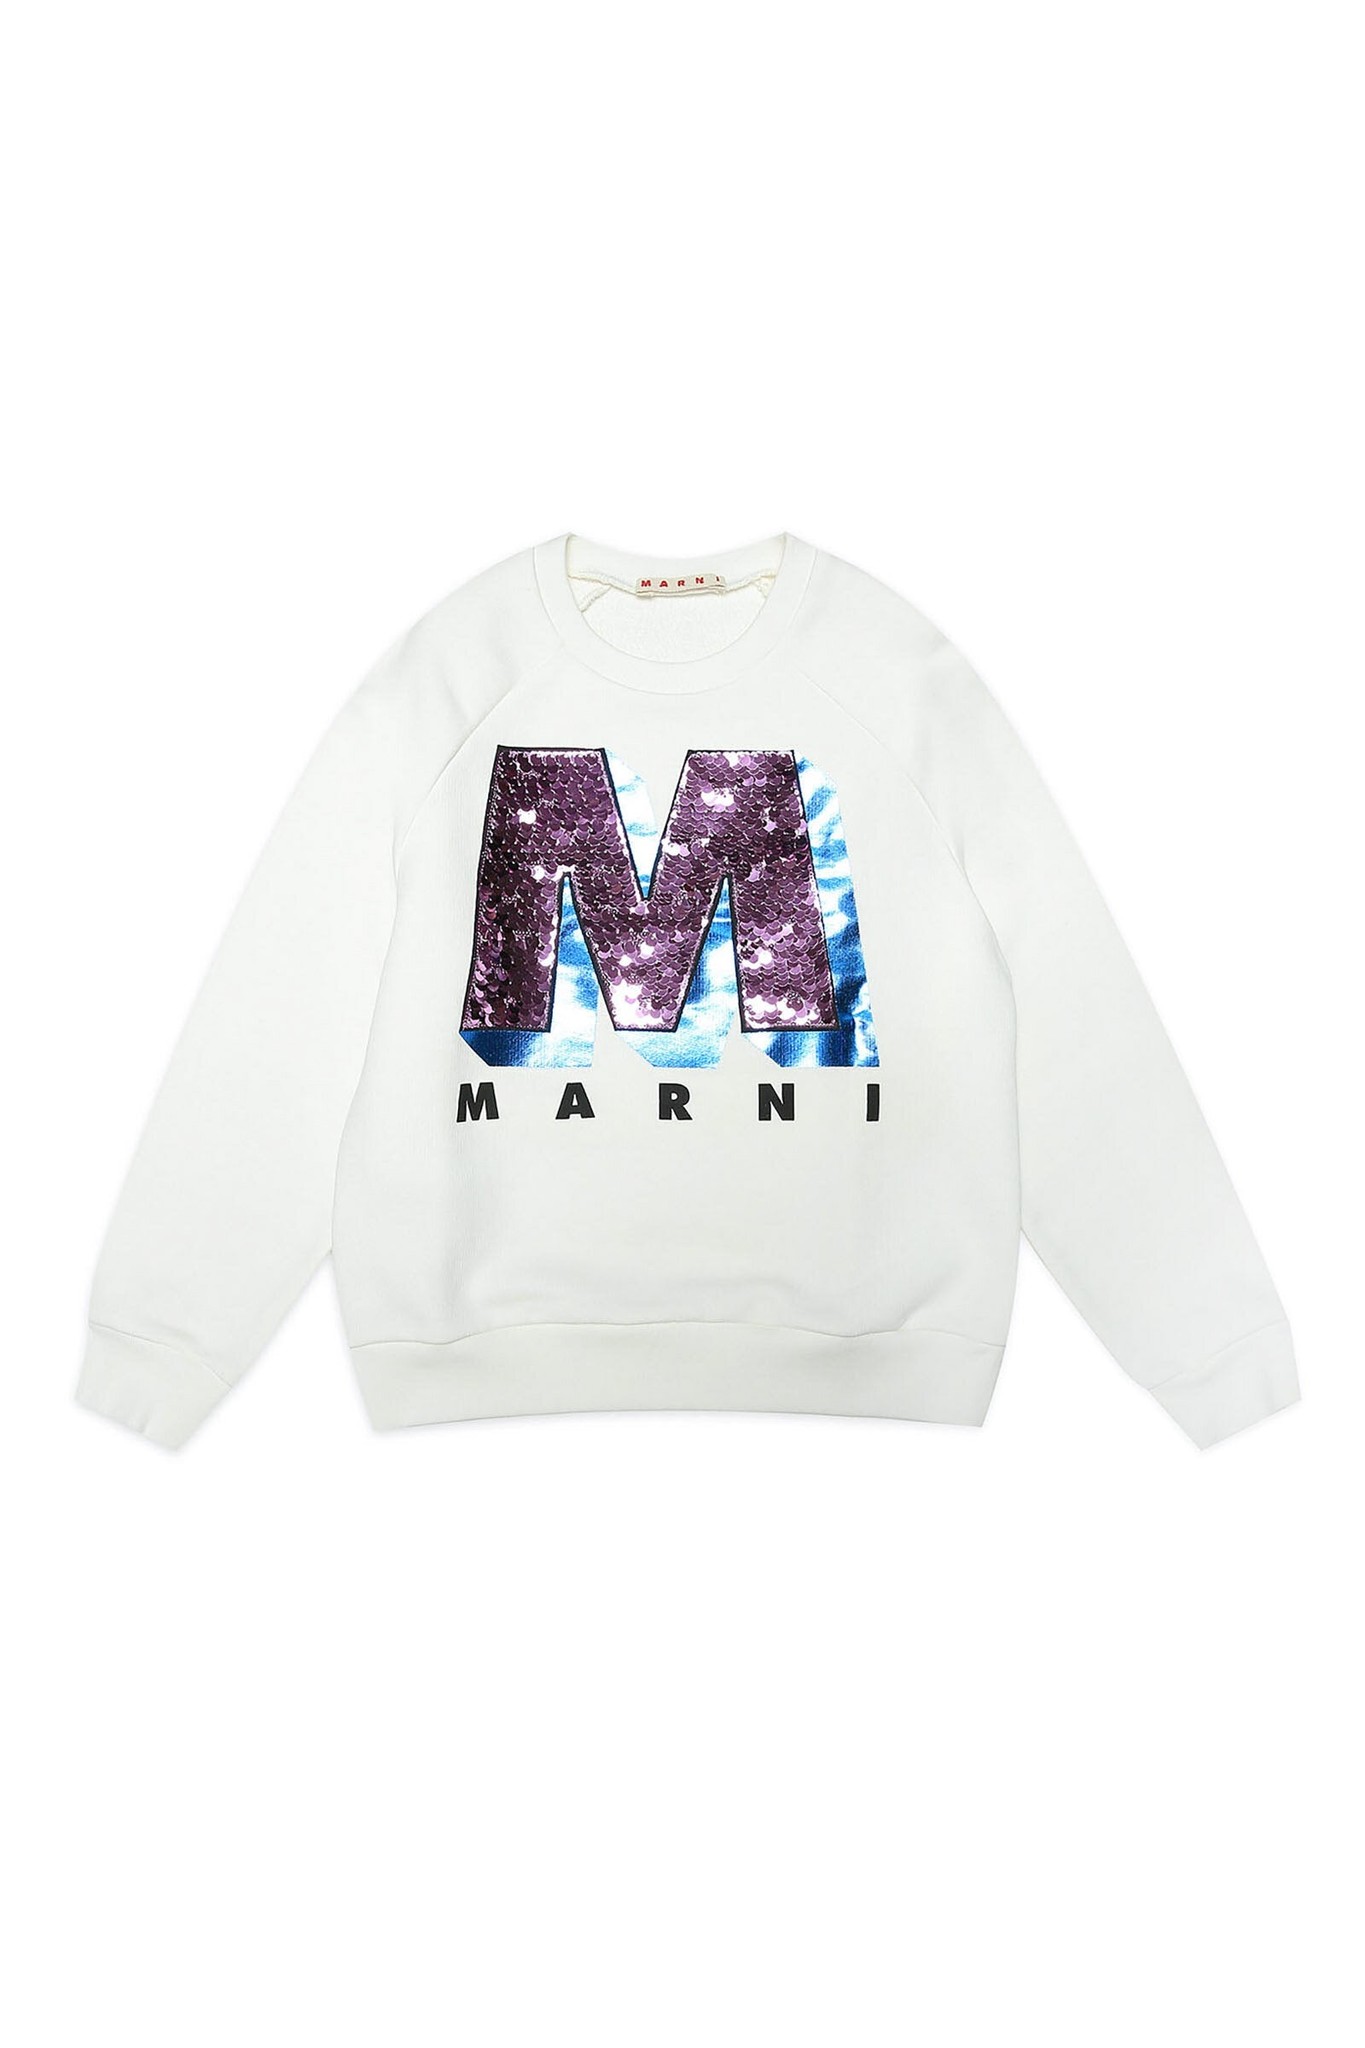 Marni - White sweatshirt with college-inspired maxi M - igloobaby